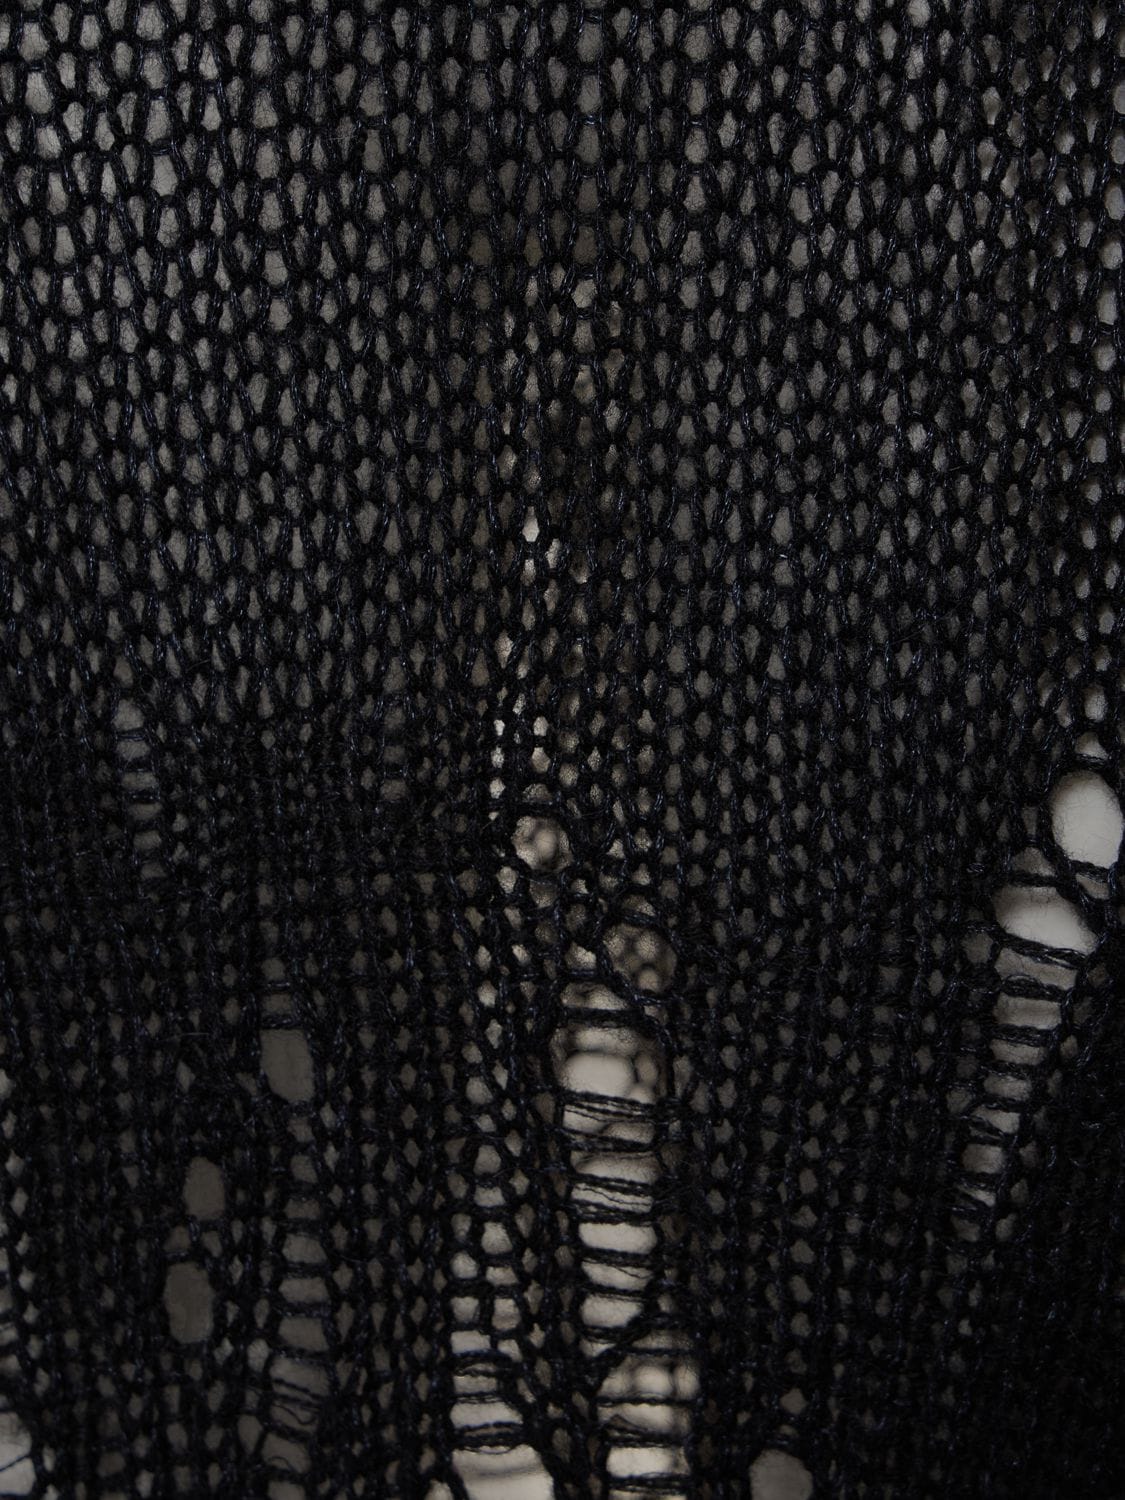 Shop Chloé Wool Blend Knit Midi Skirt In Black